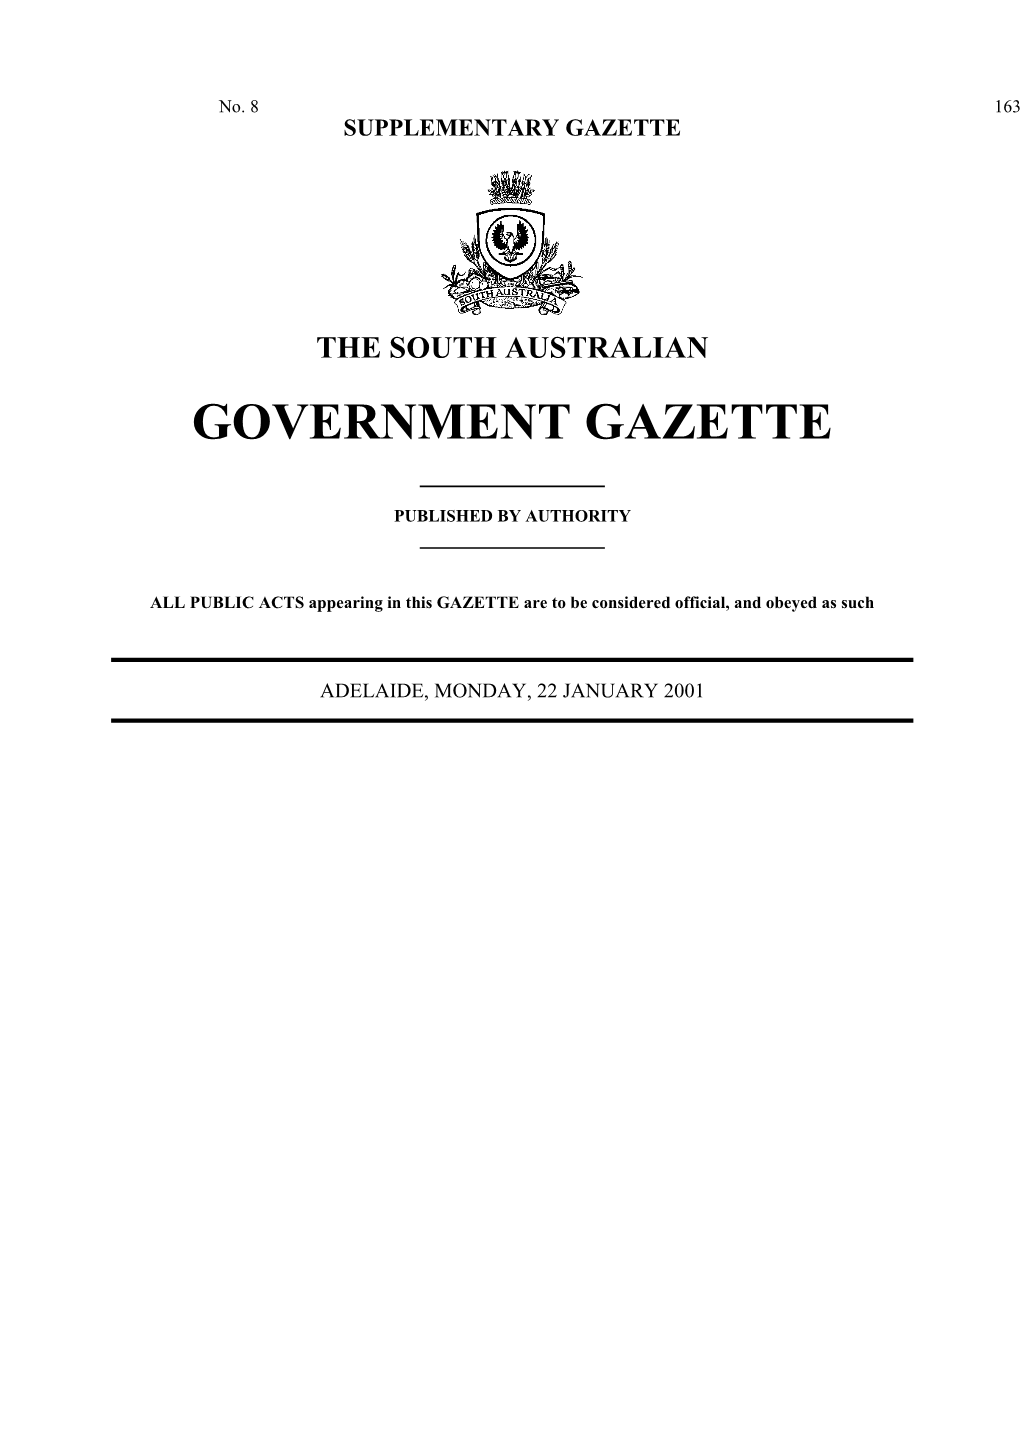 Supplementary Gazette s2